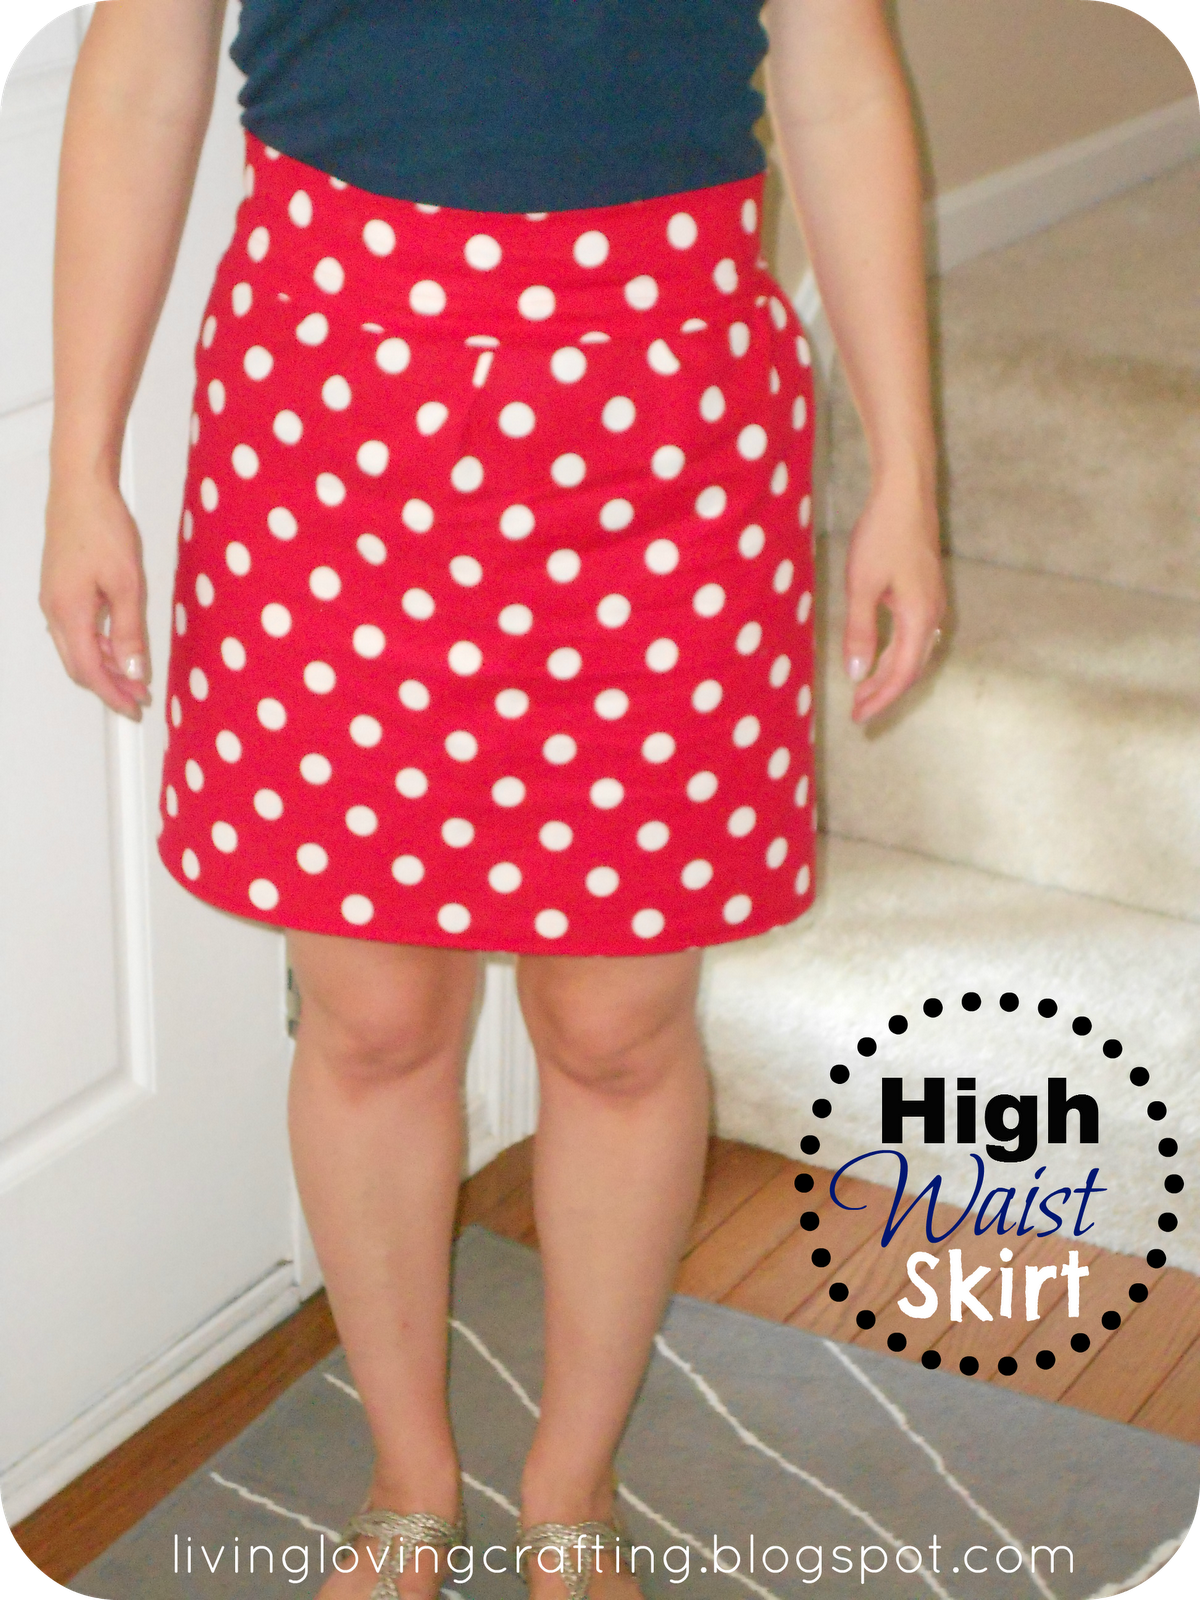 Living, Loving, Crafting: High Waist Skirt